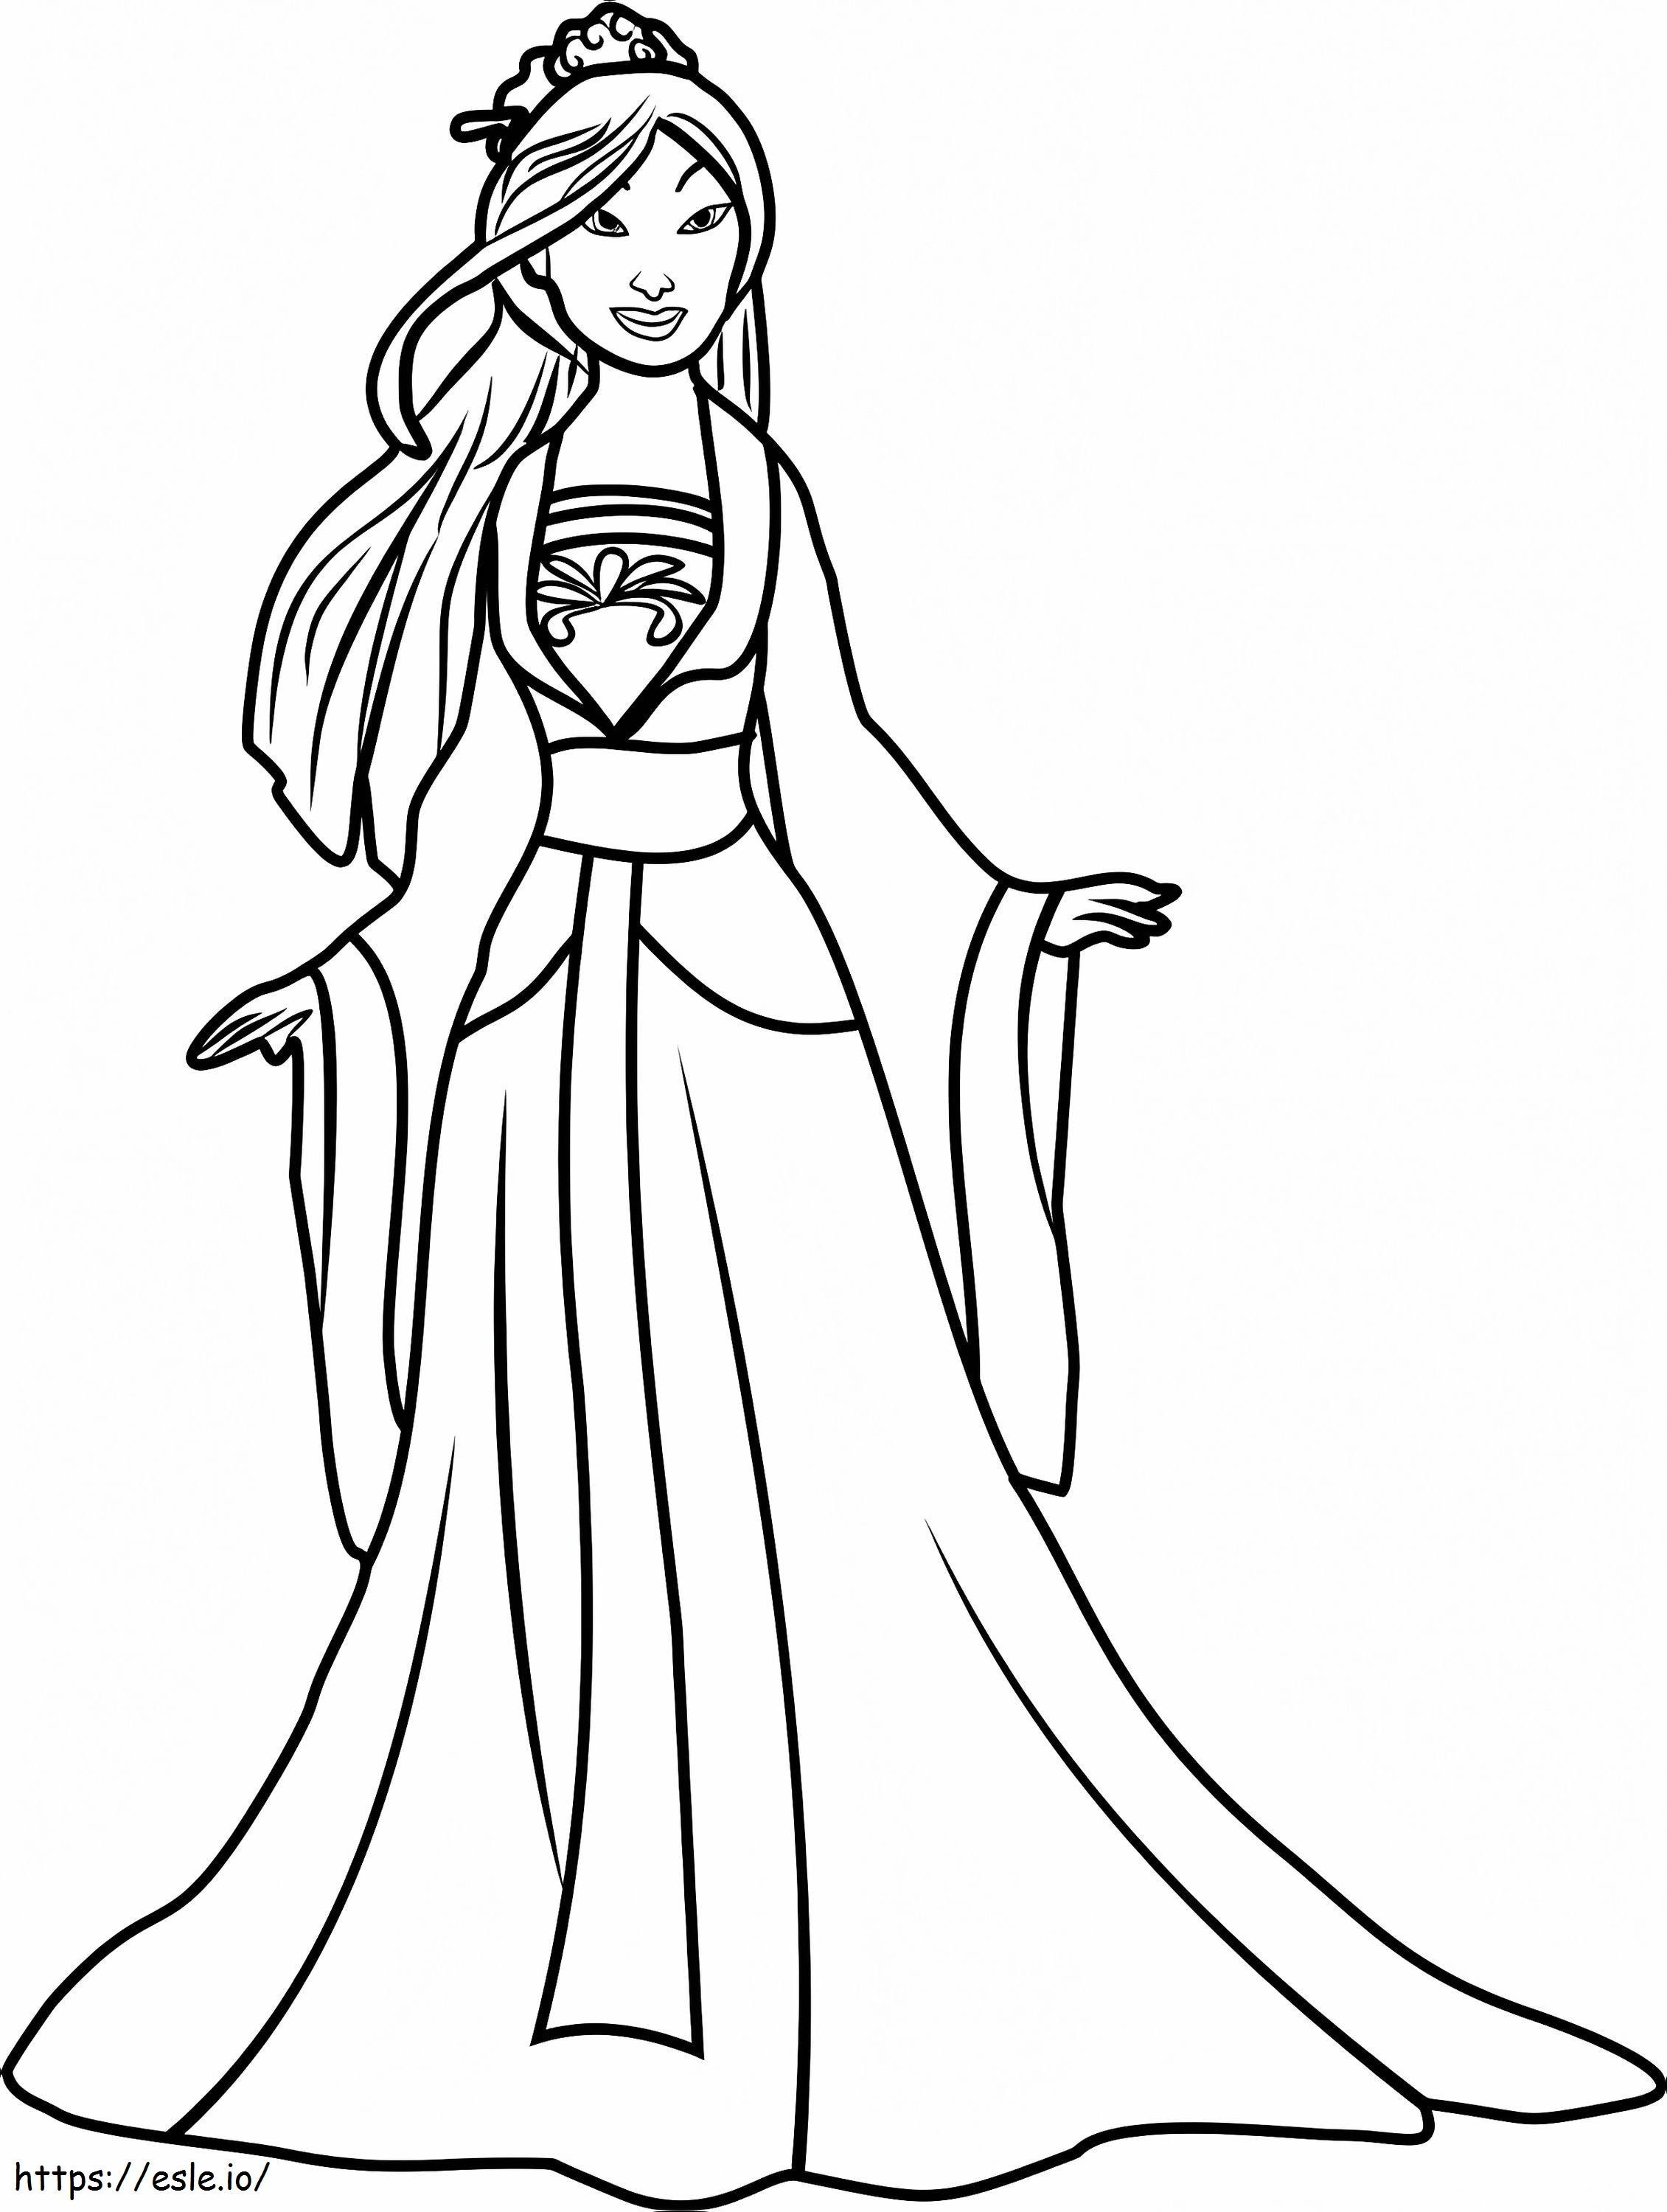 Coloriage  Princesse Mulan1 à imprimer dessin